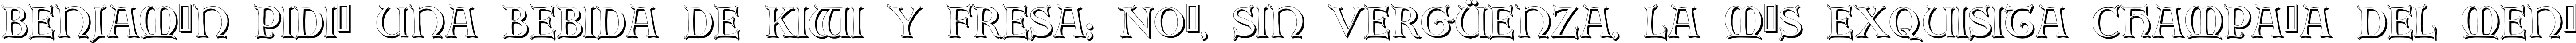 Пример написания шрифтом Erbar Initialen Shadow текста на испанском